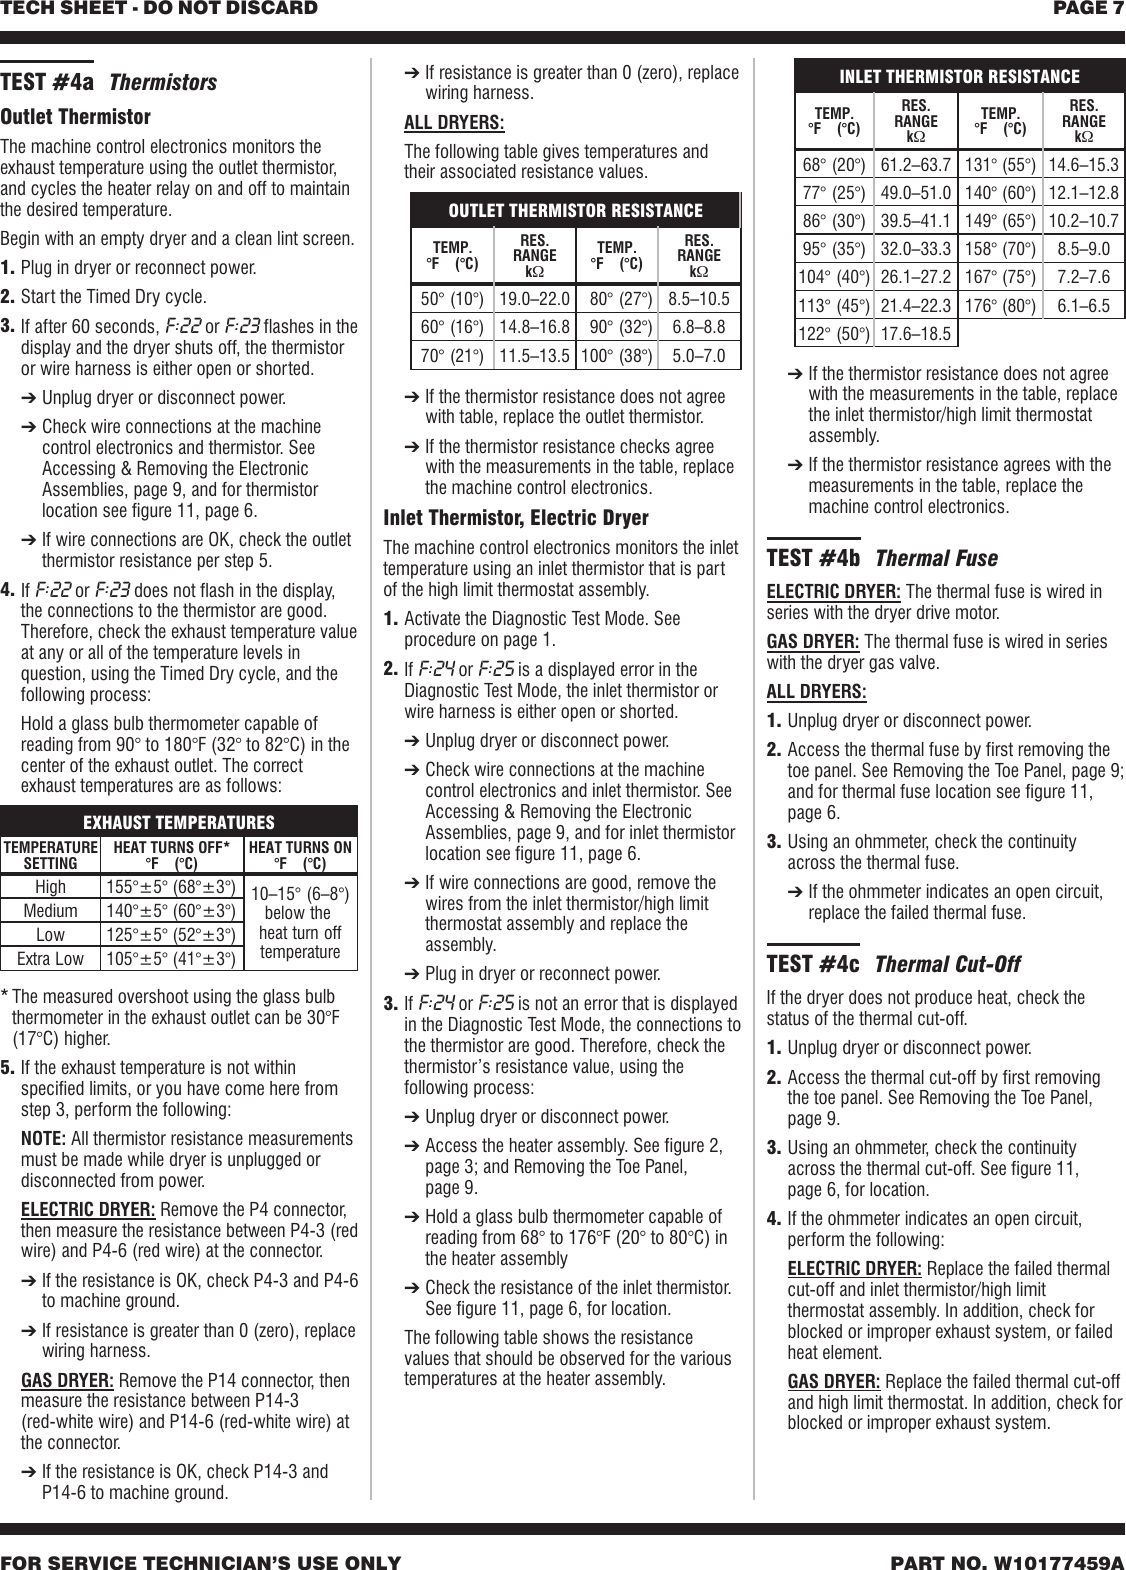 Page 7 of 12 - ZB80281_W10177459A.vp  W10177459A - Whirlpool Duet Sport Dryer Tech Sheet